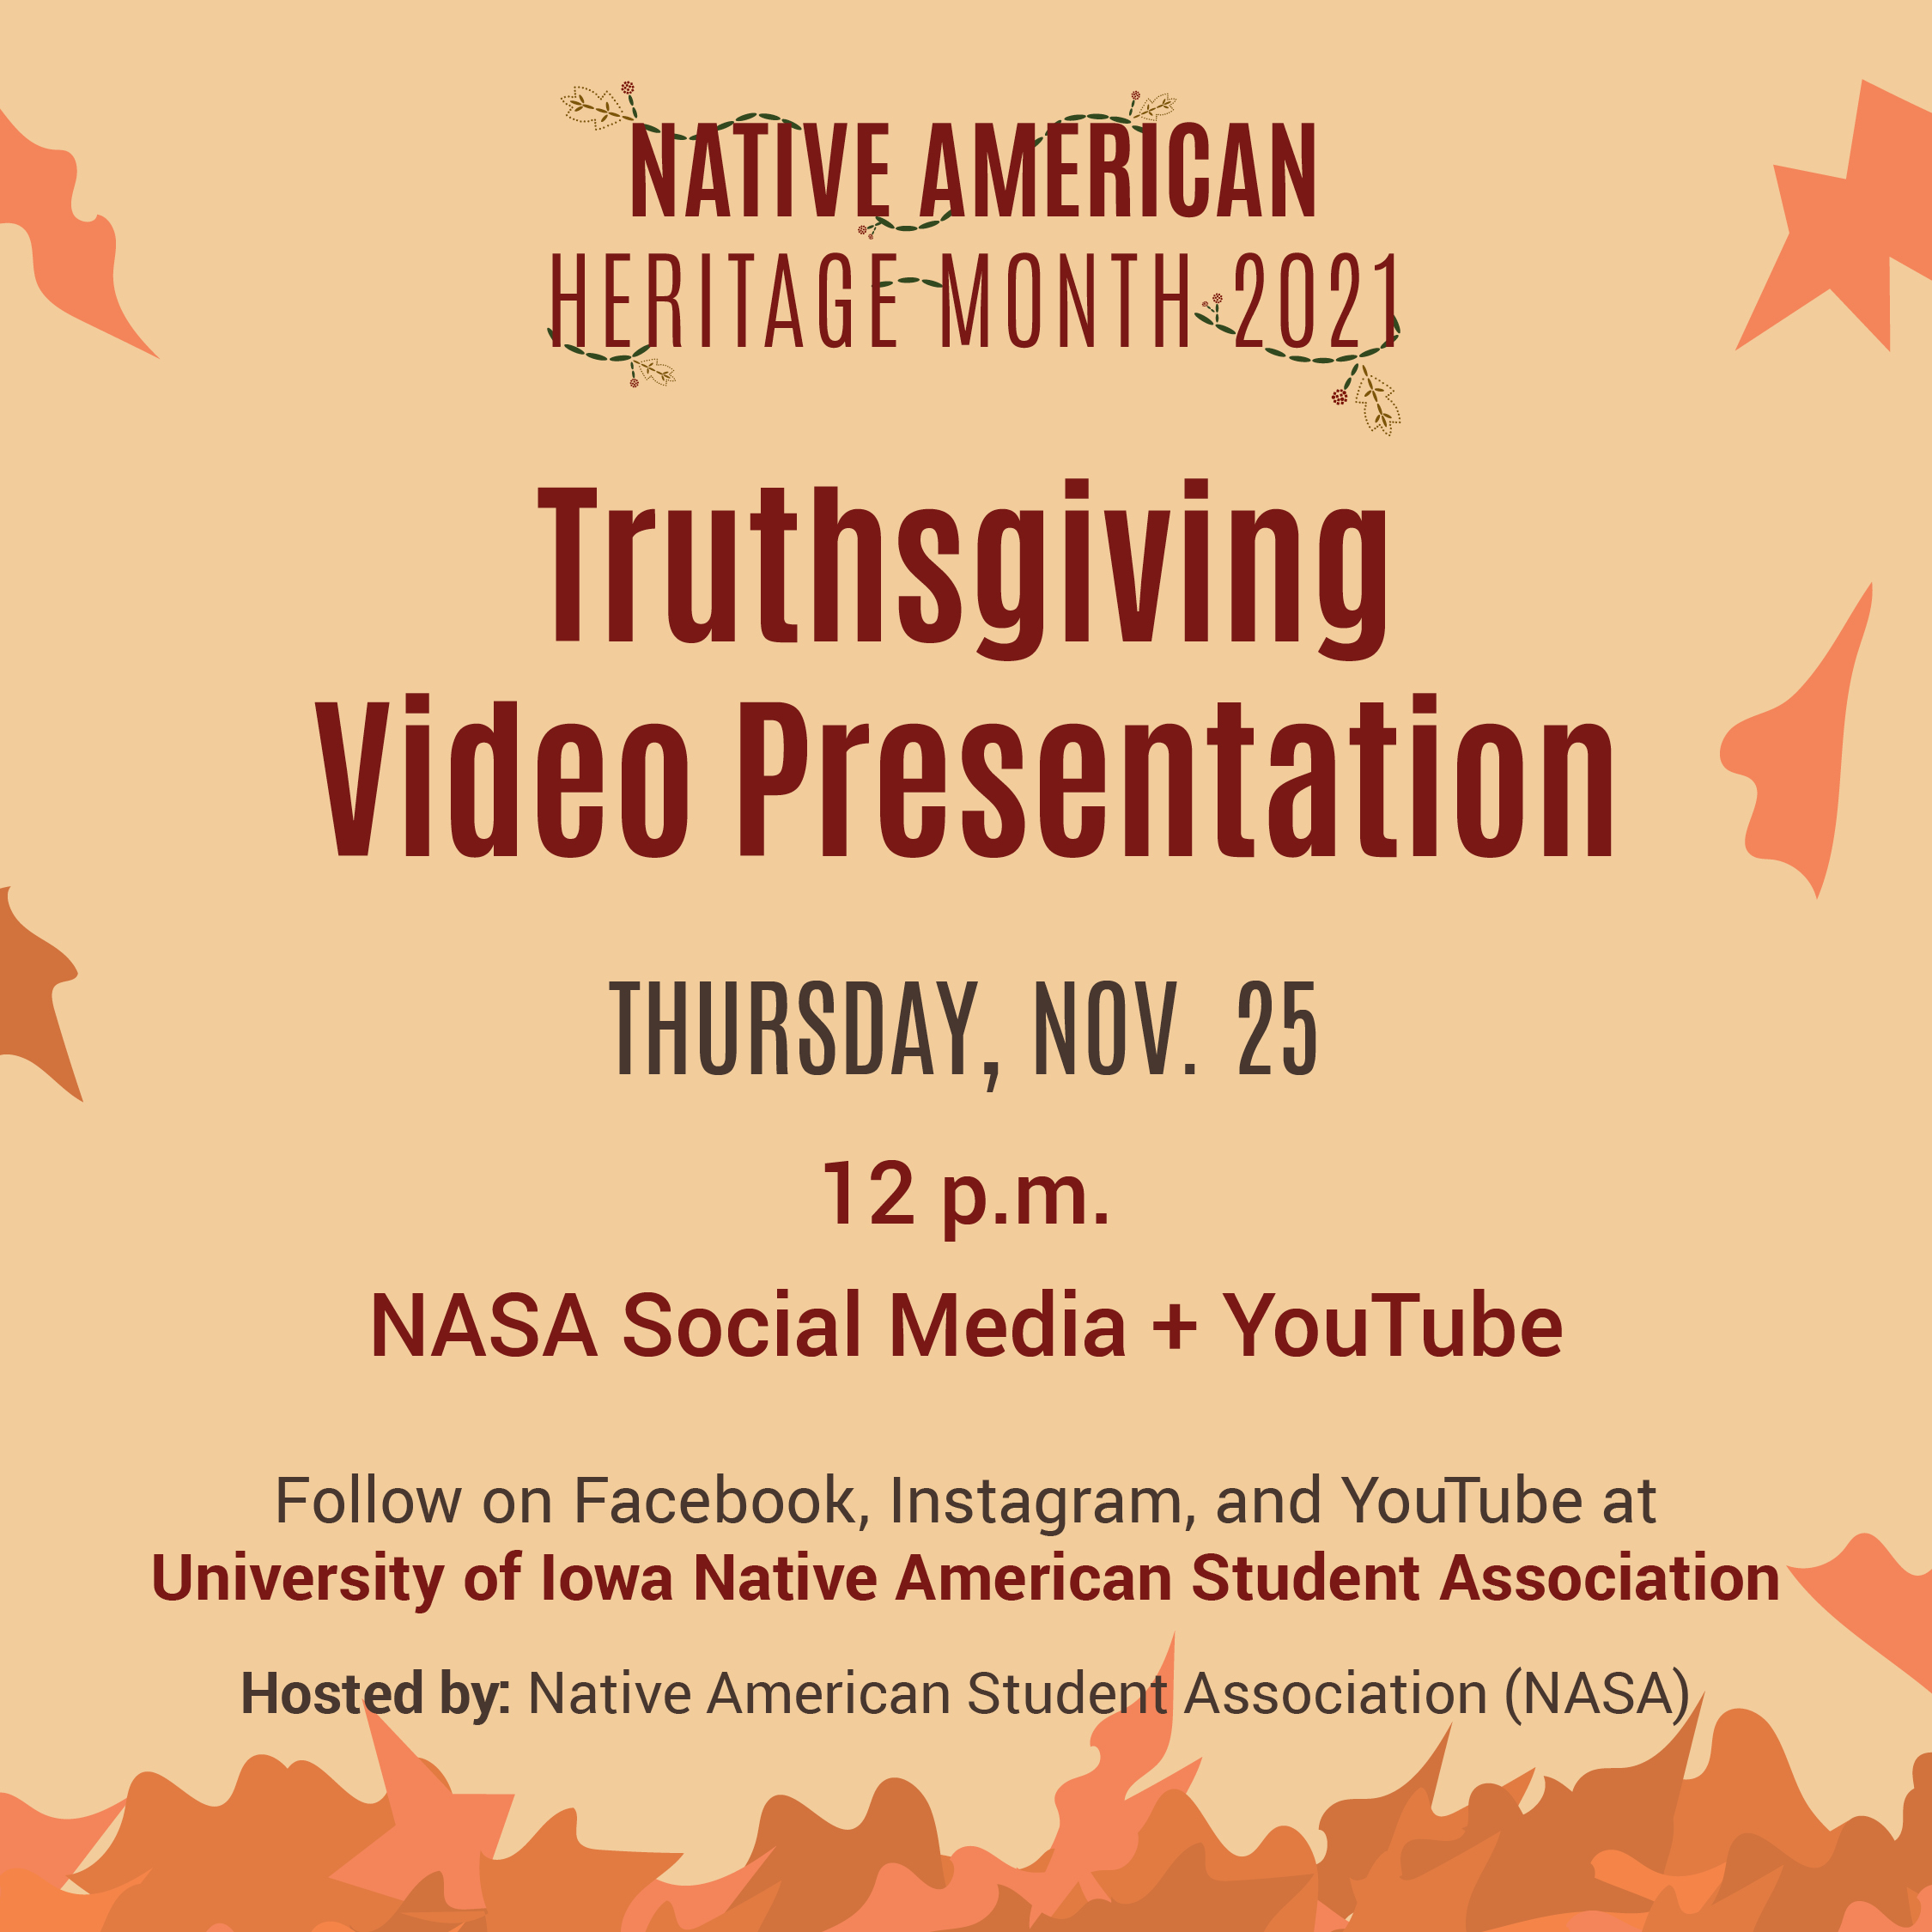 Truthgiving Video Presentation Flyer